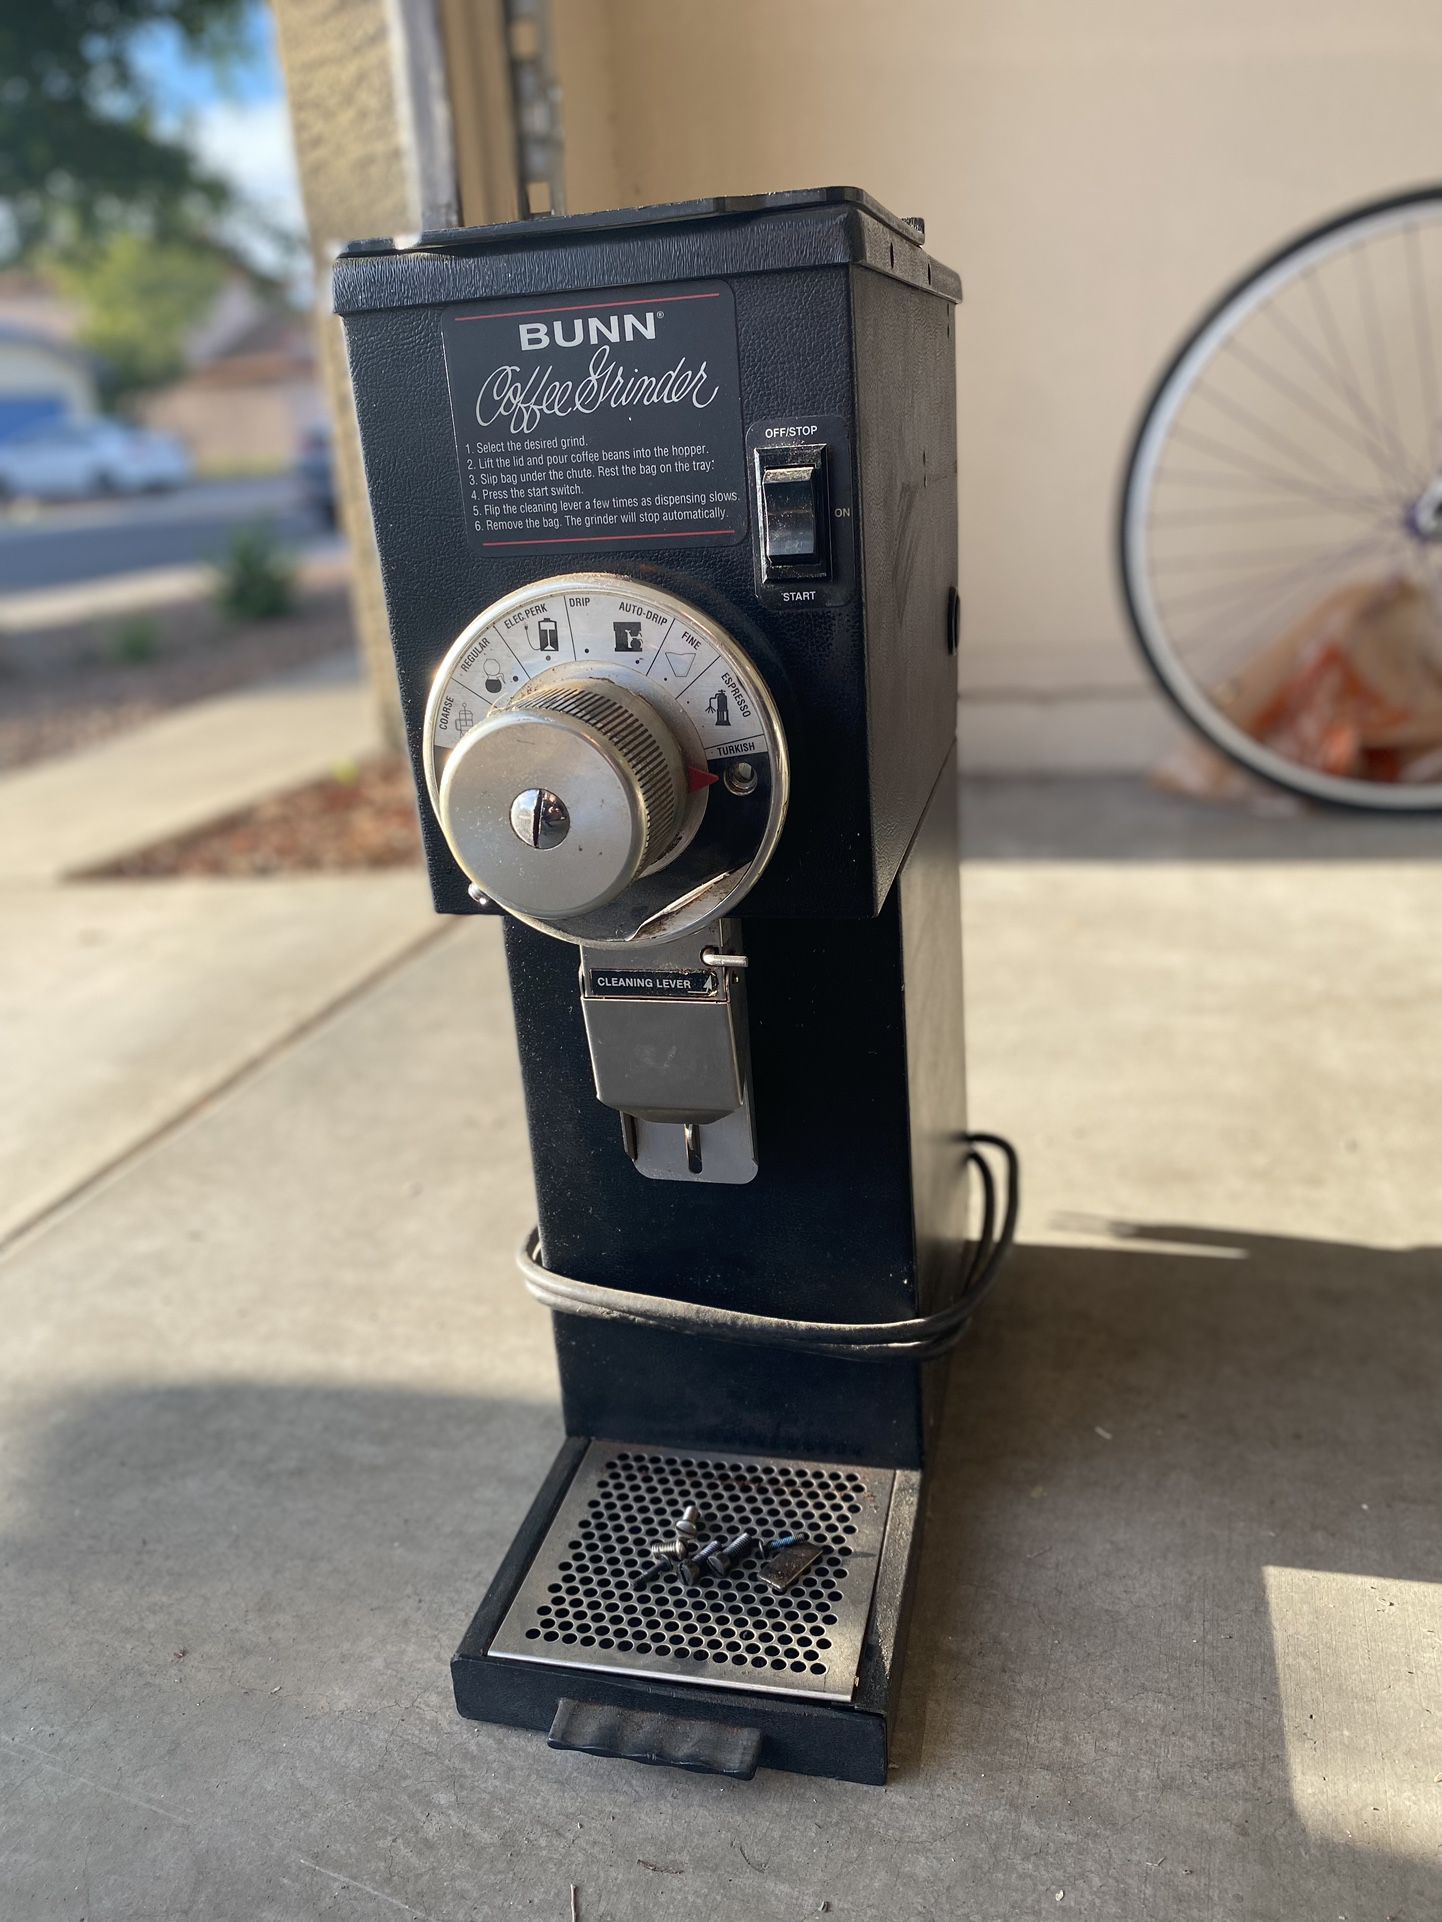 Bunn Coffee Grinder for Sale in Peoria, AZ - OfferUp